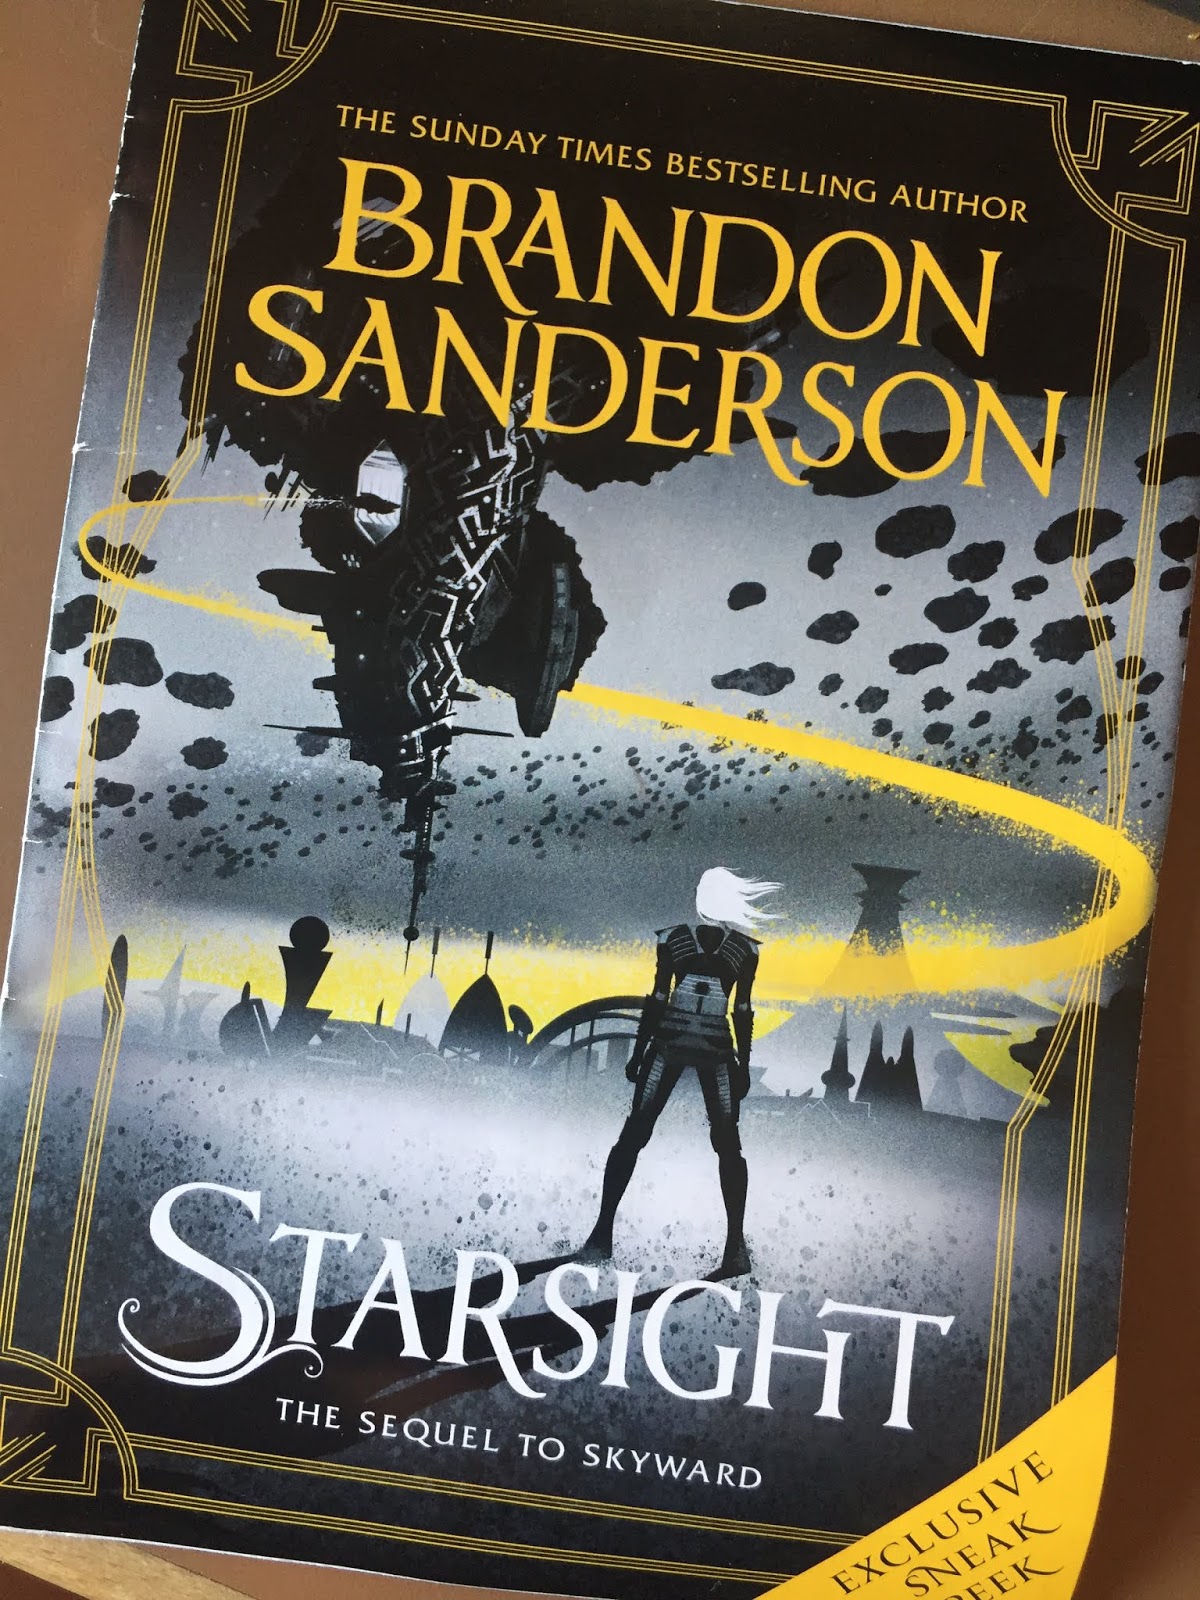 Enter the Skyward by Brandon Sanderson Pre-Order Giveaway